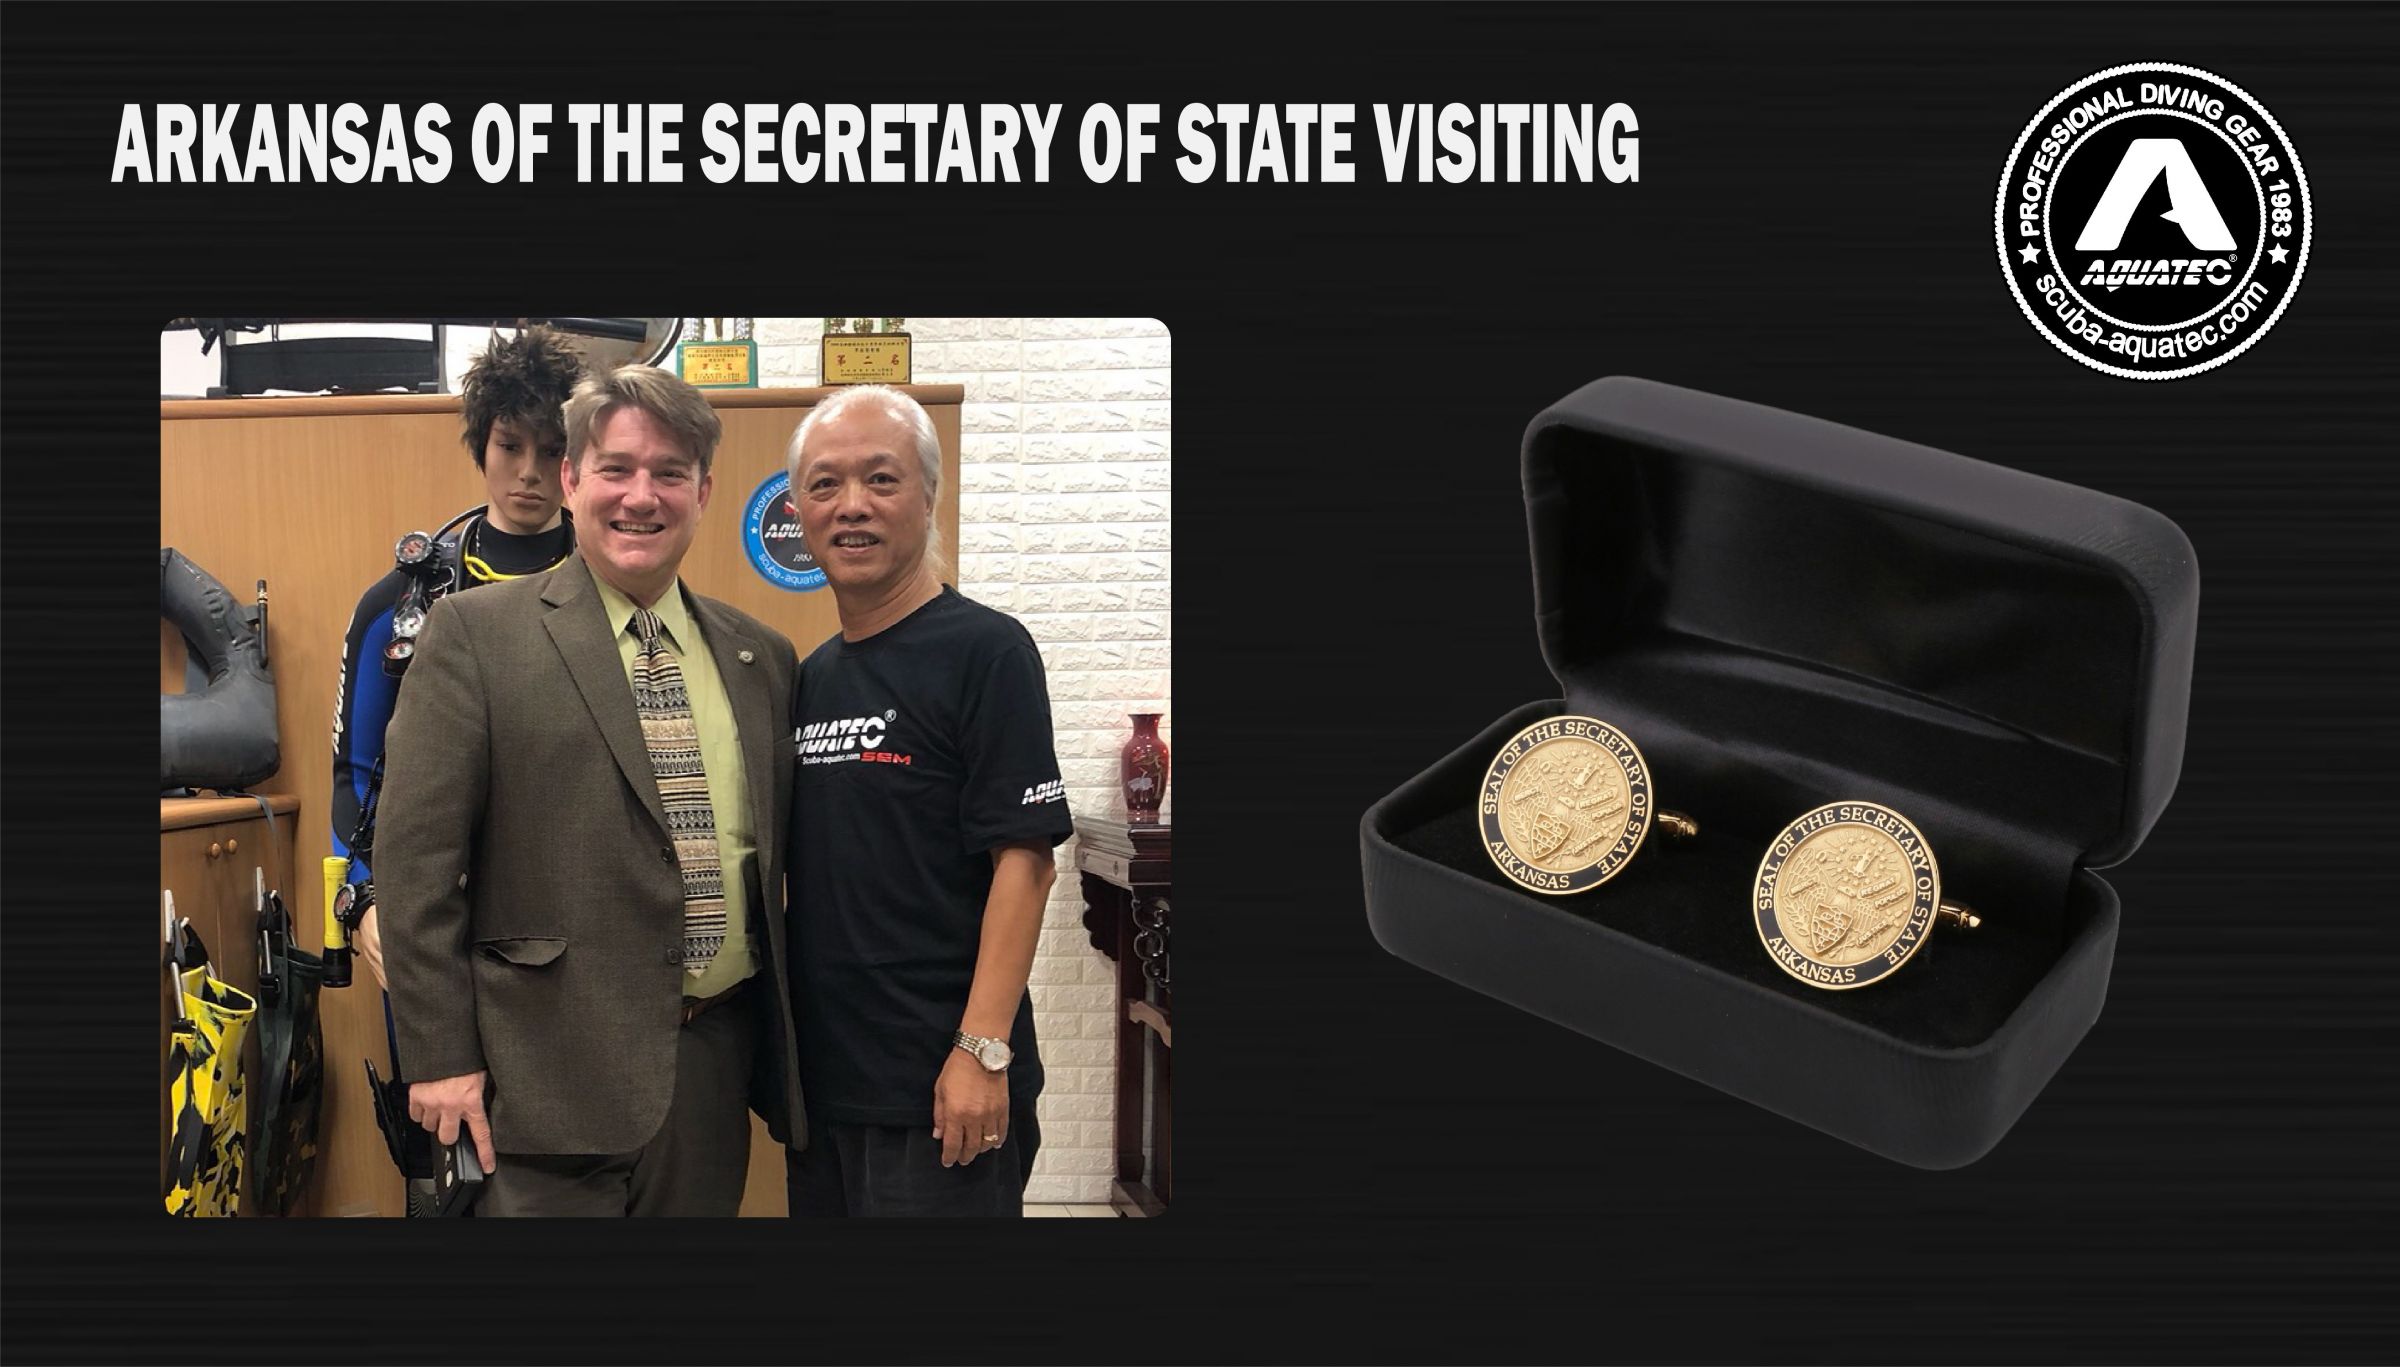 Scuba Aquatec Arkansas Of The Secretary Of State Visiting